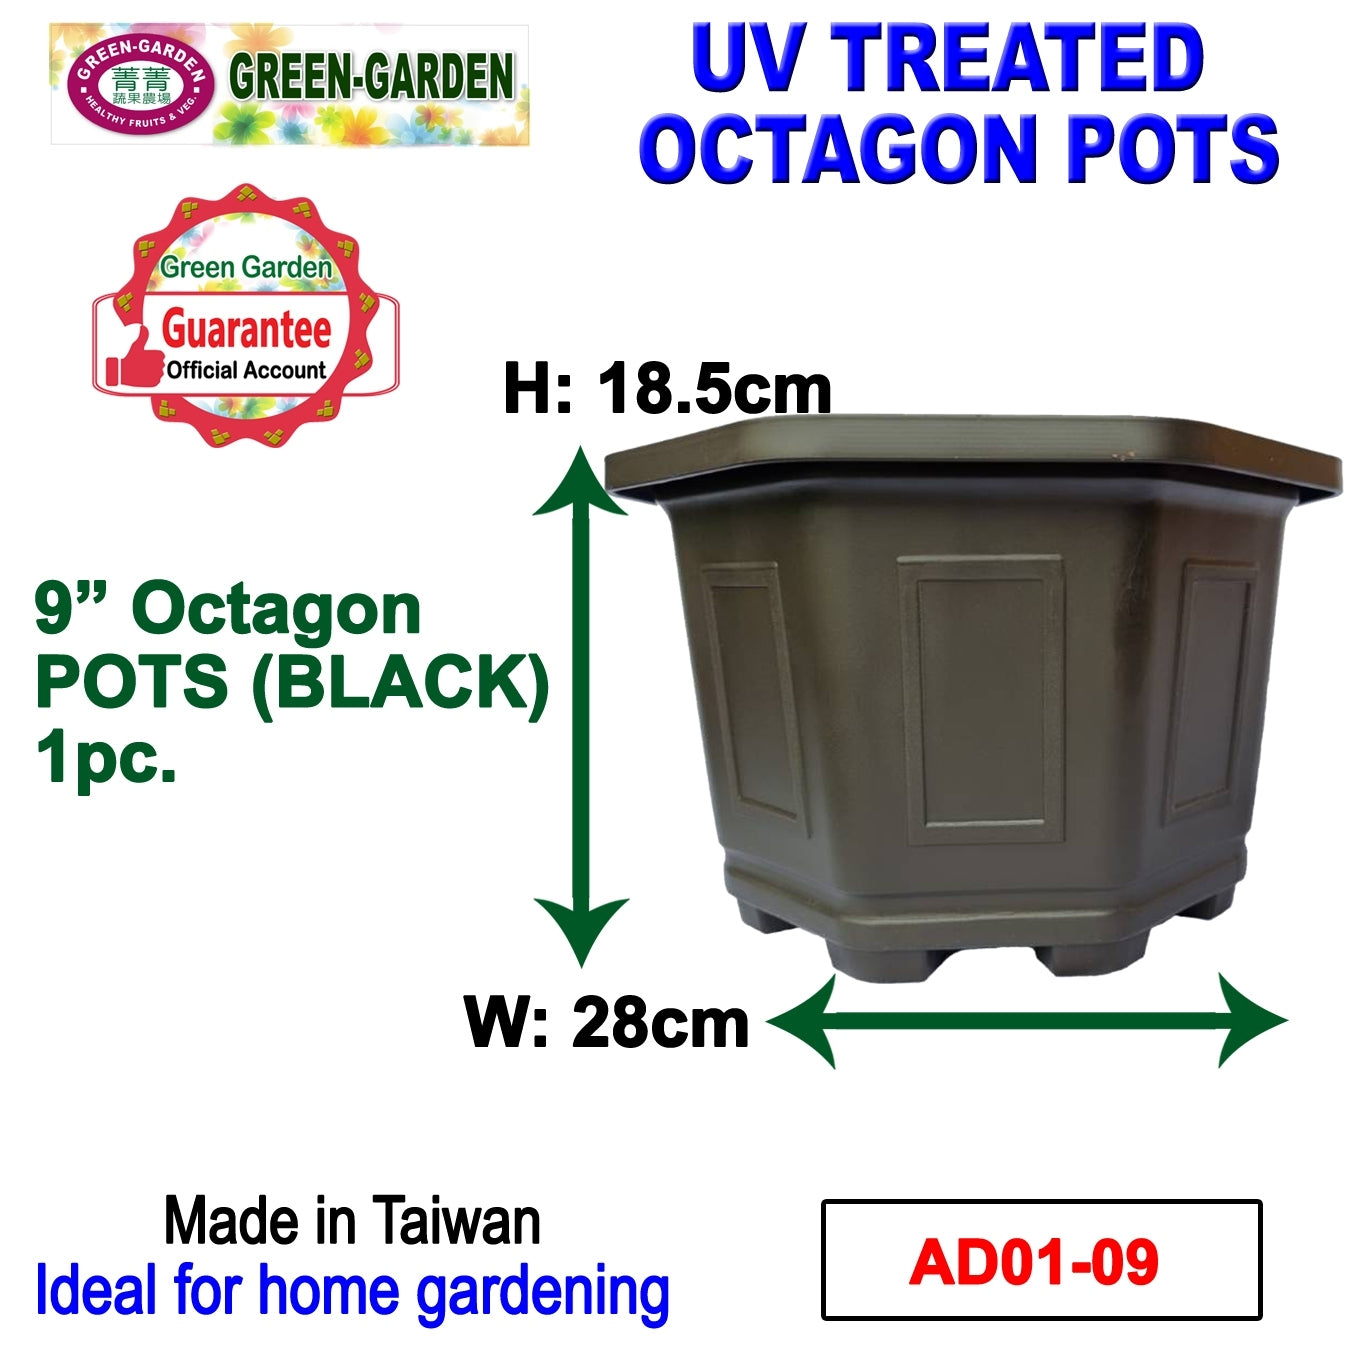 UV TREATED Octagonal Pot 9"